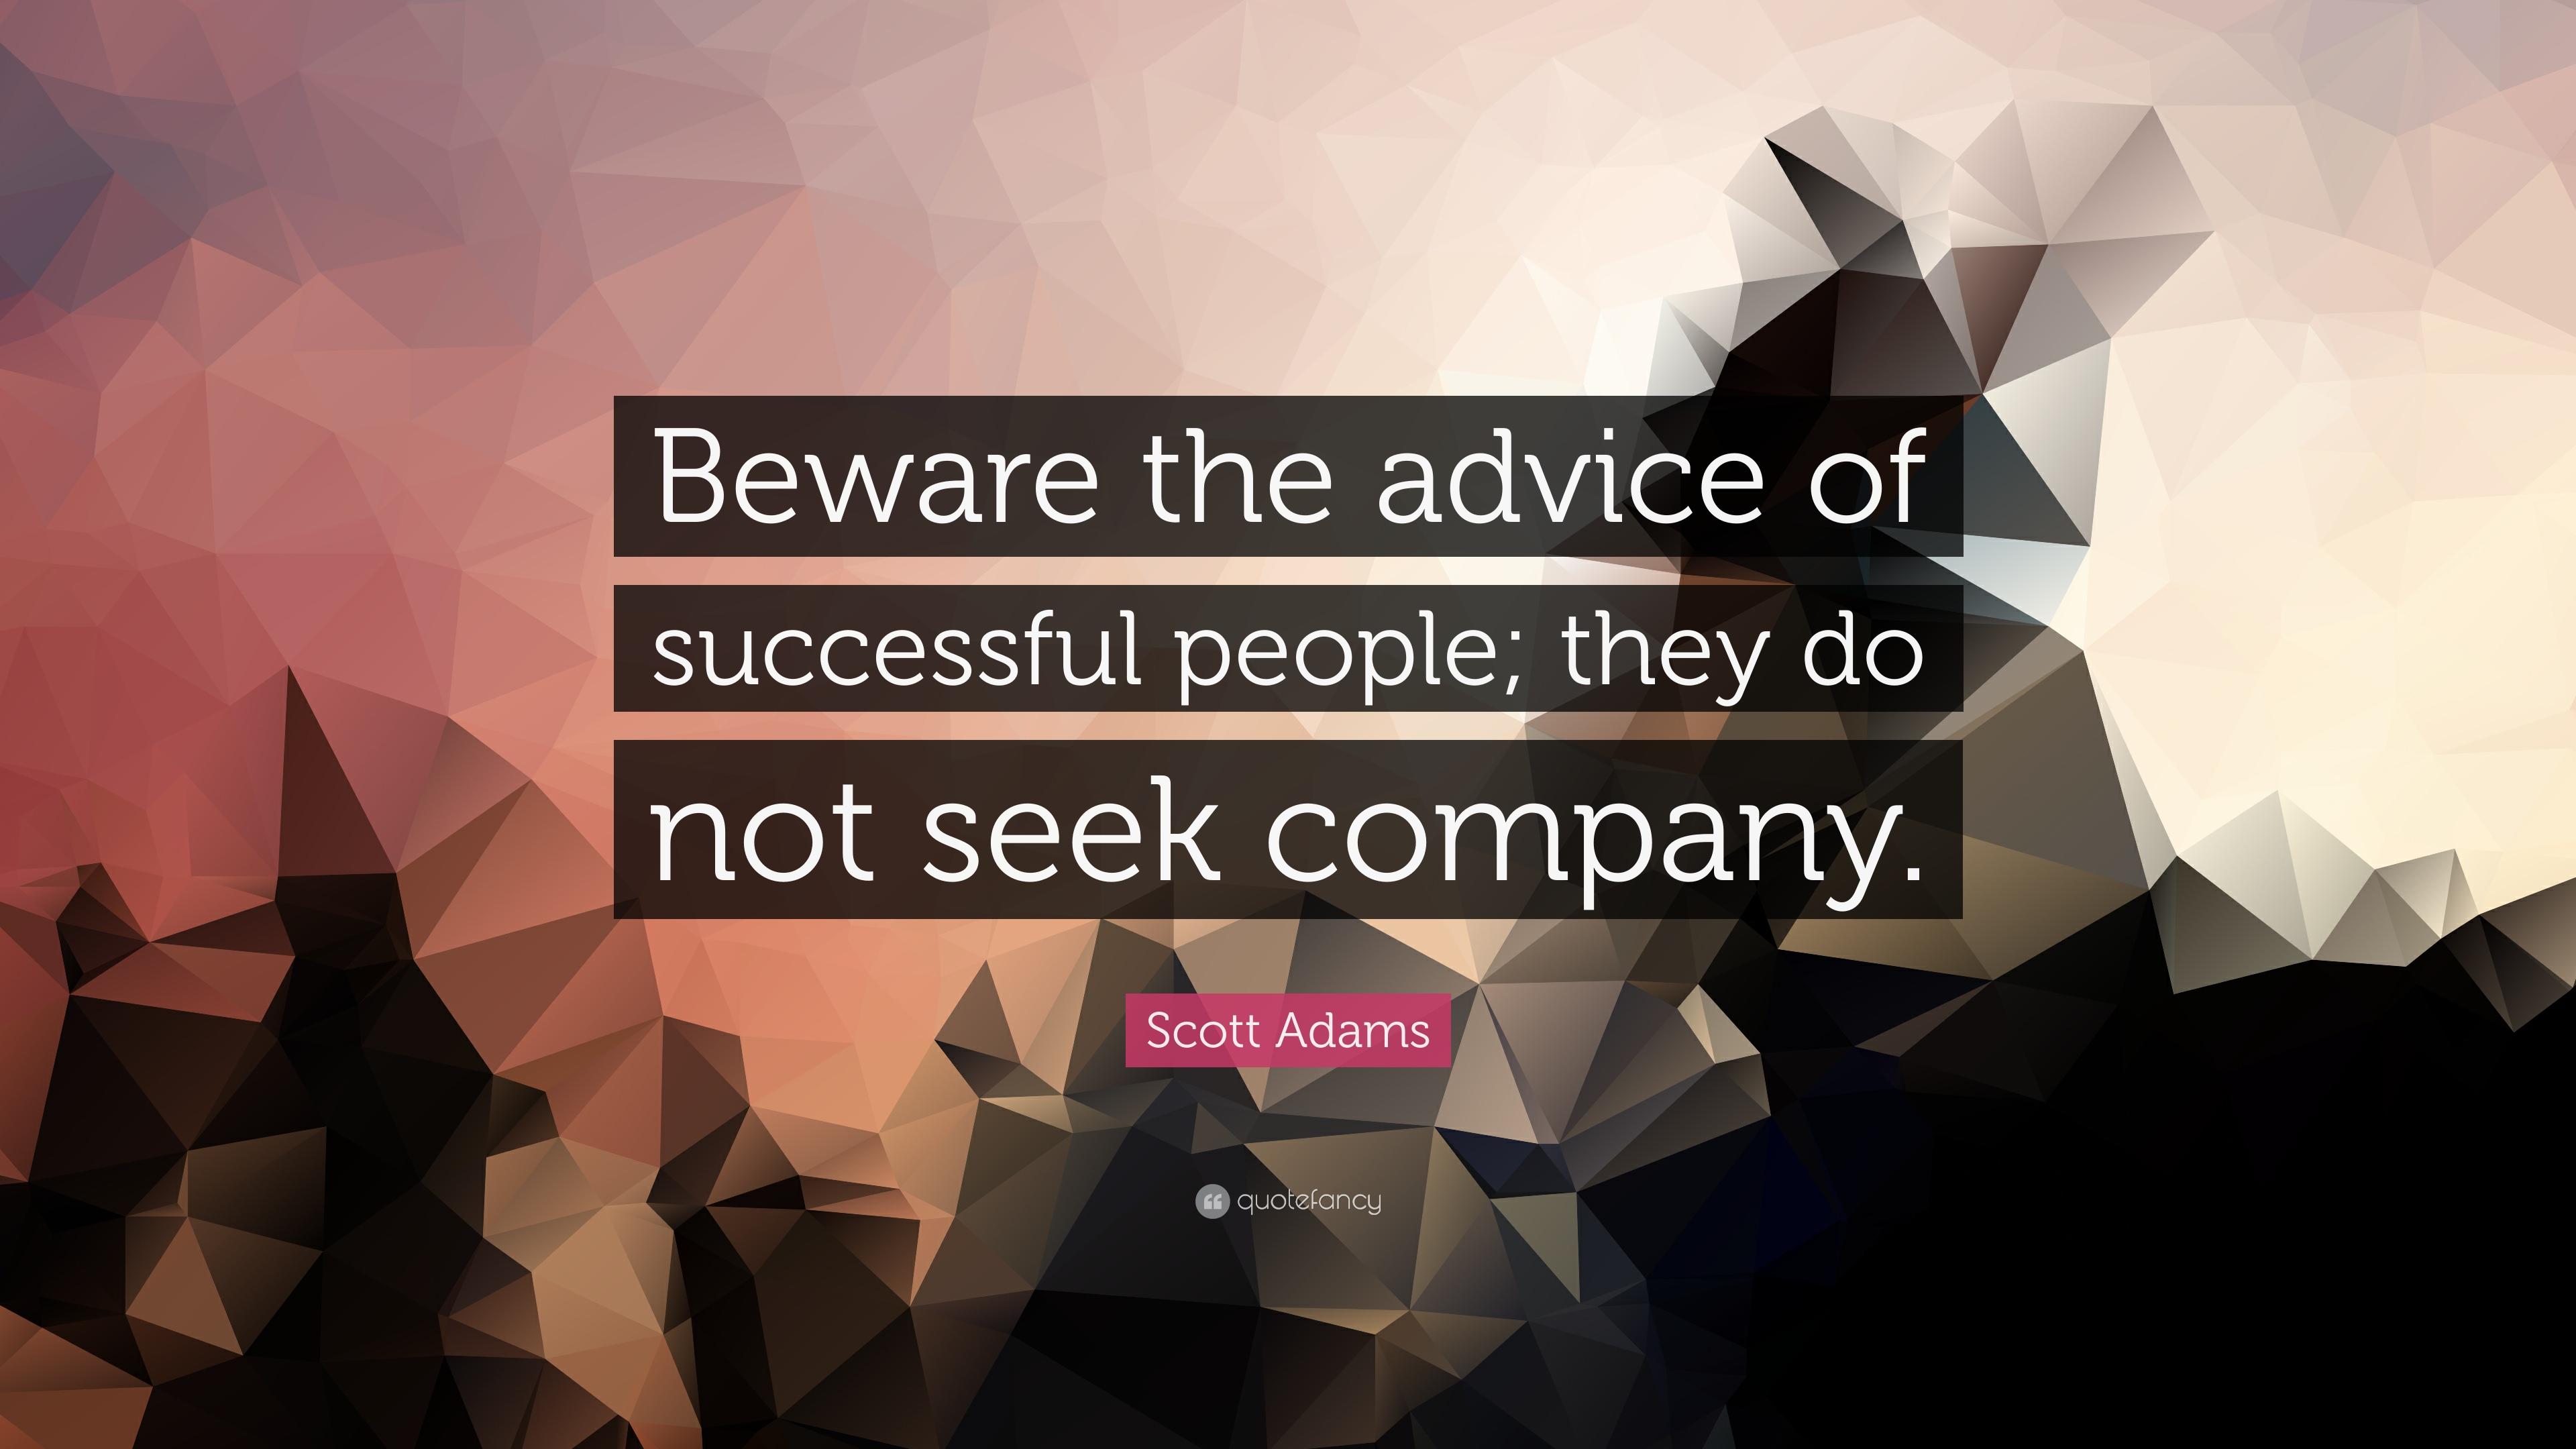 Scott Adams Quote: “Beware the advice of successful people